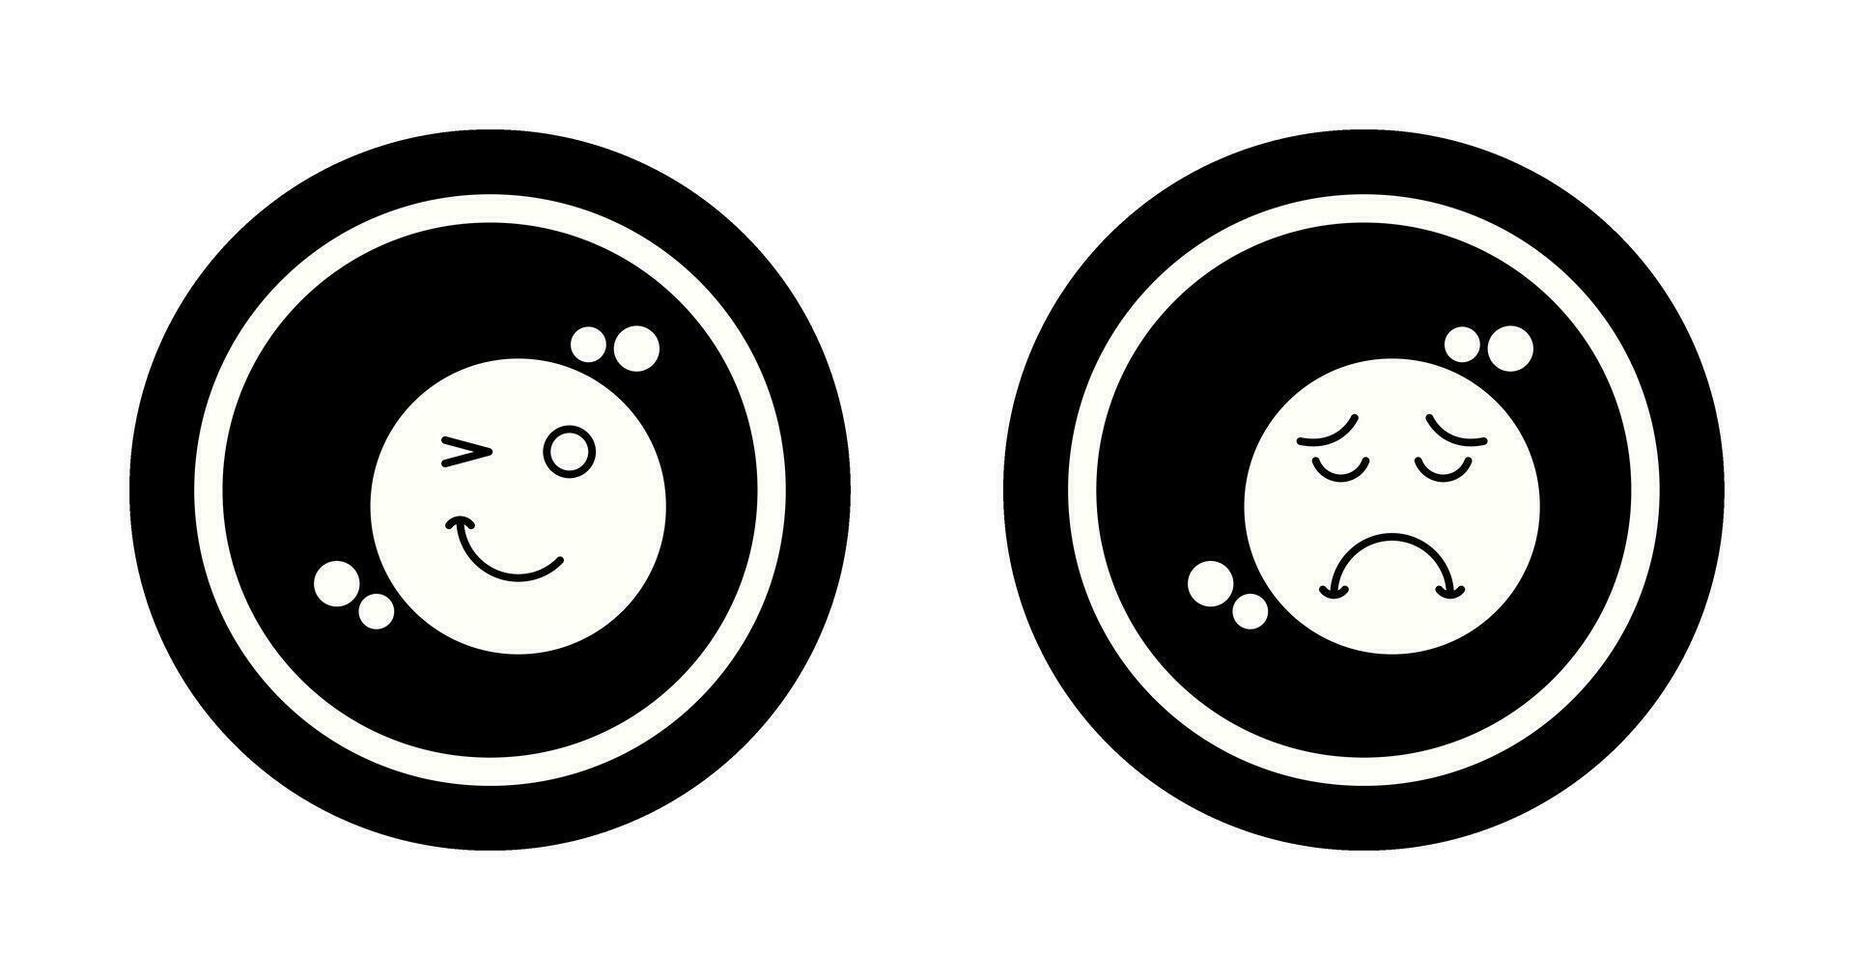 Wink and Sad Icon vector